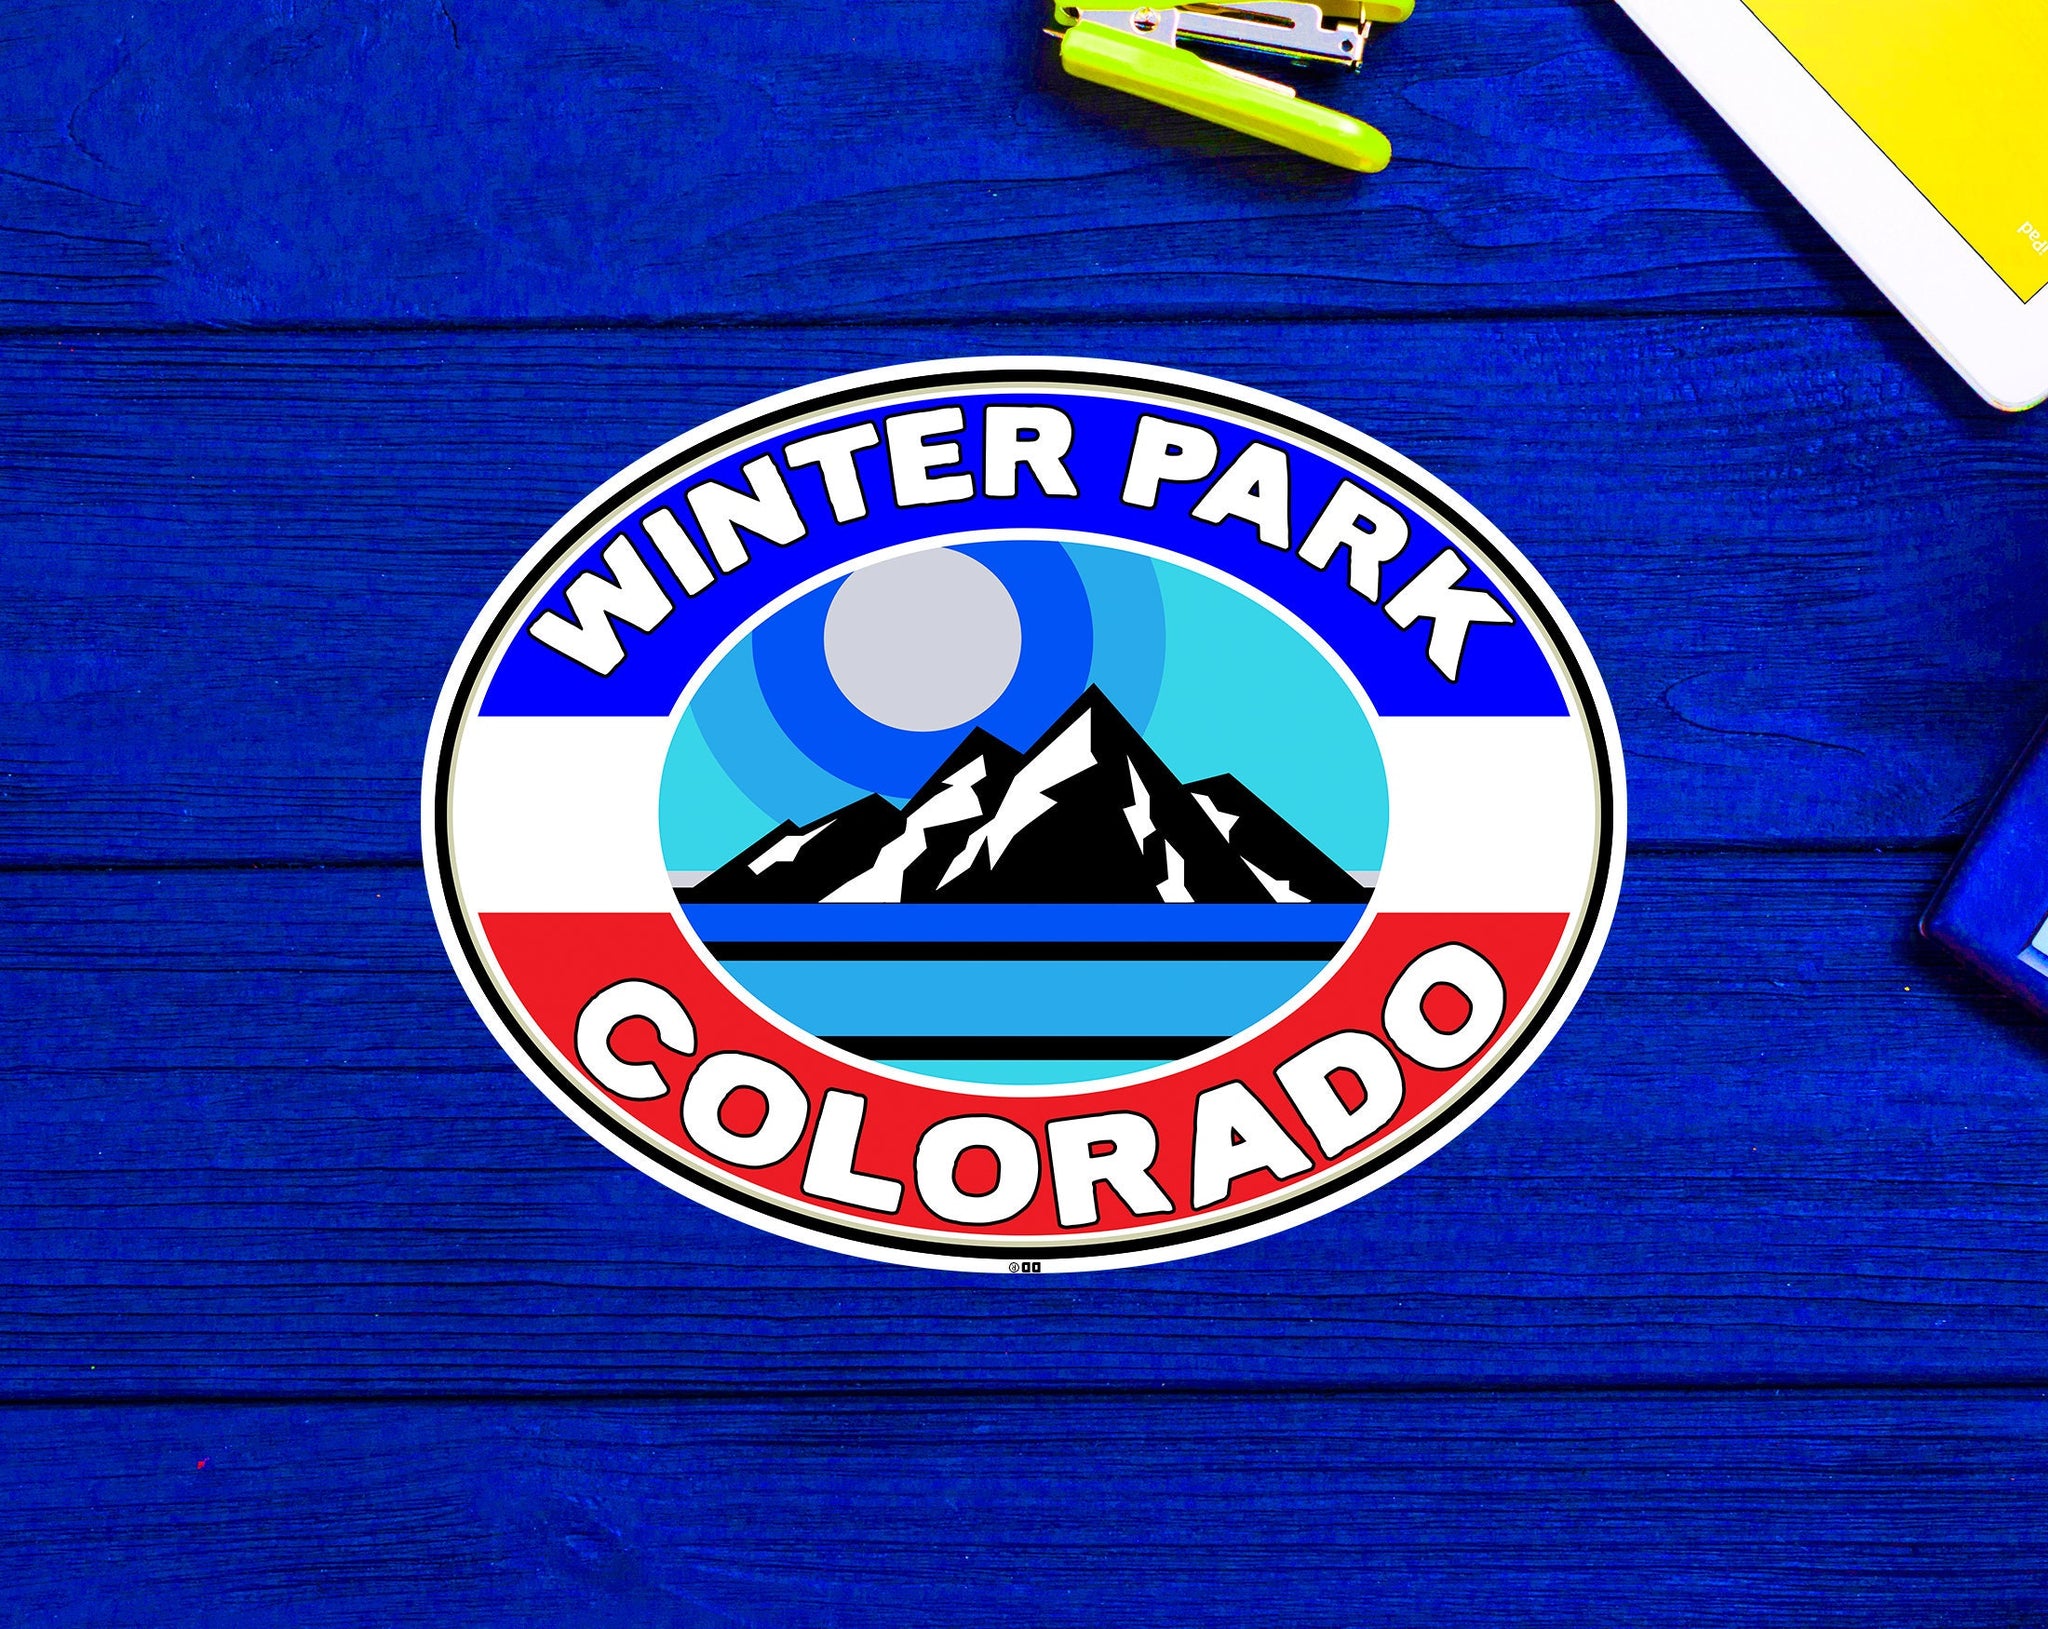 Winter Park Colorado Skiing Decal Sticker 3.75" Vinyl Laptop Bumper Luggage